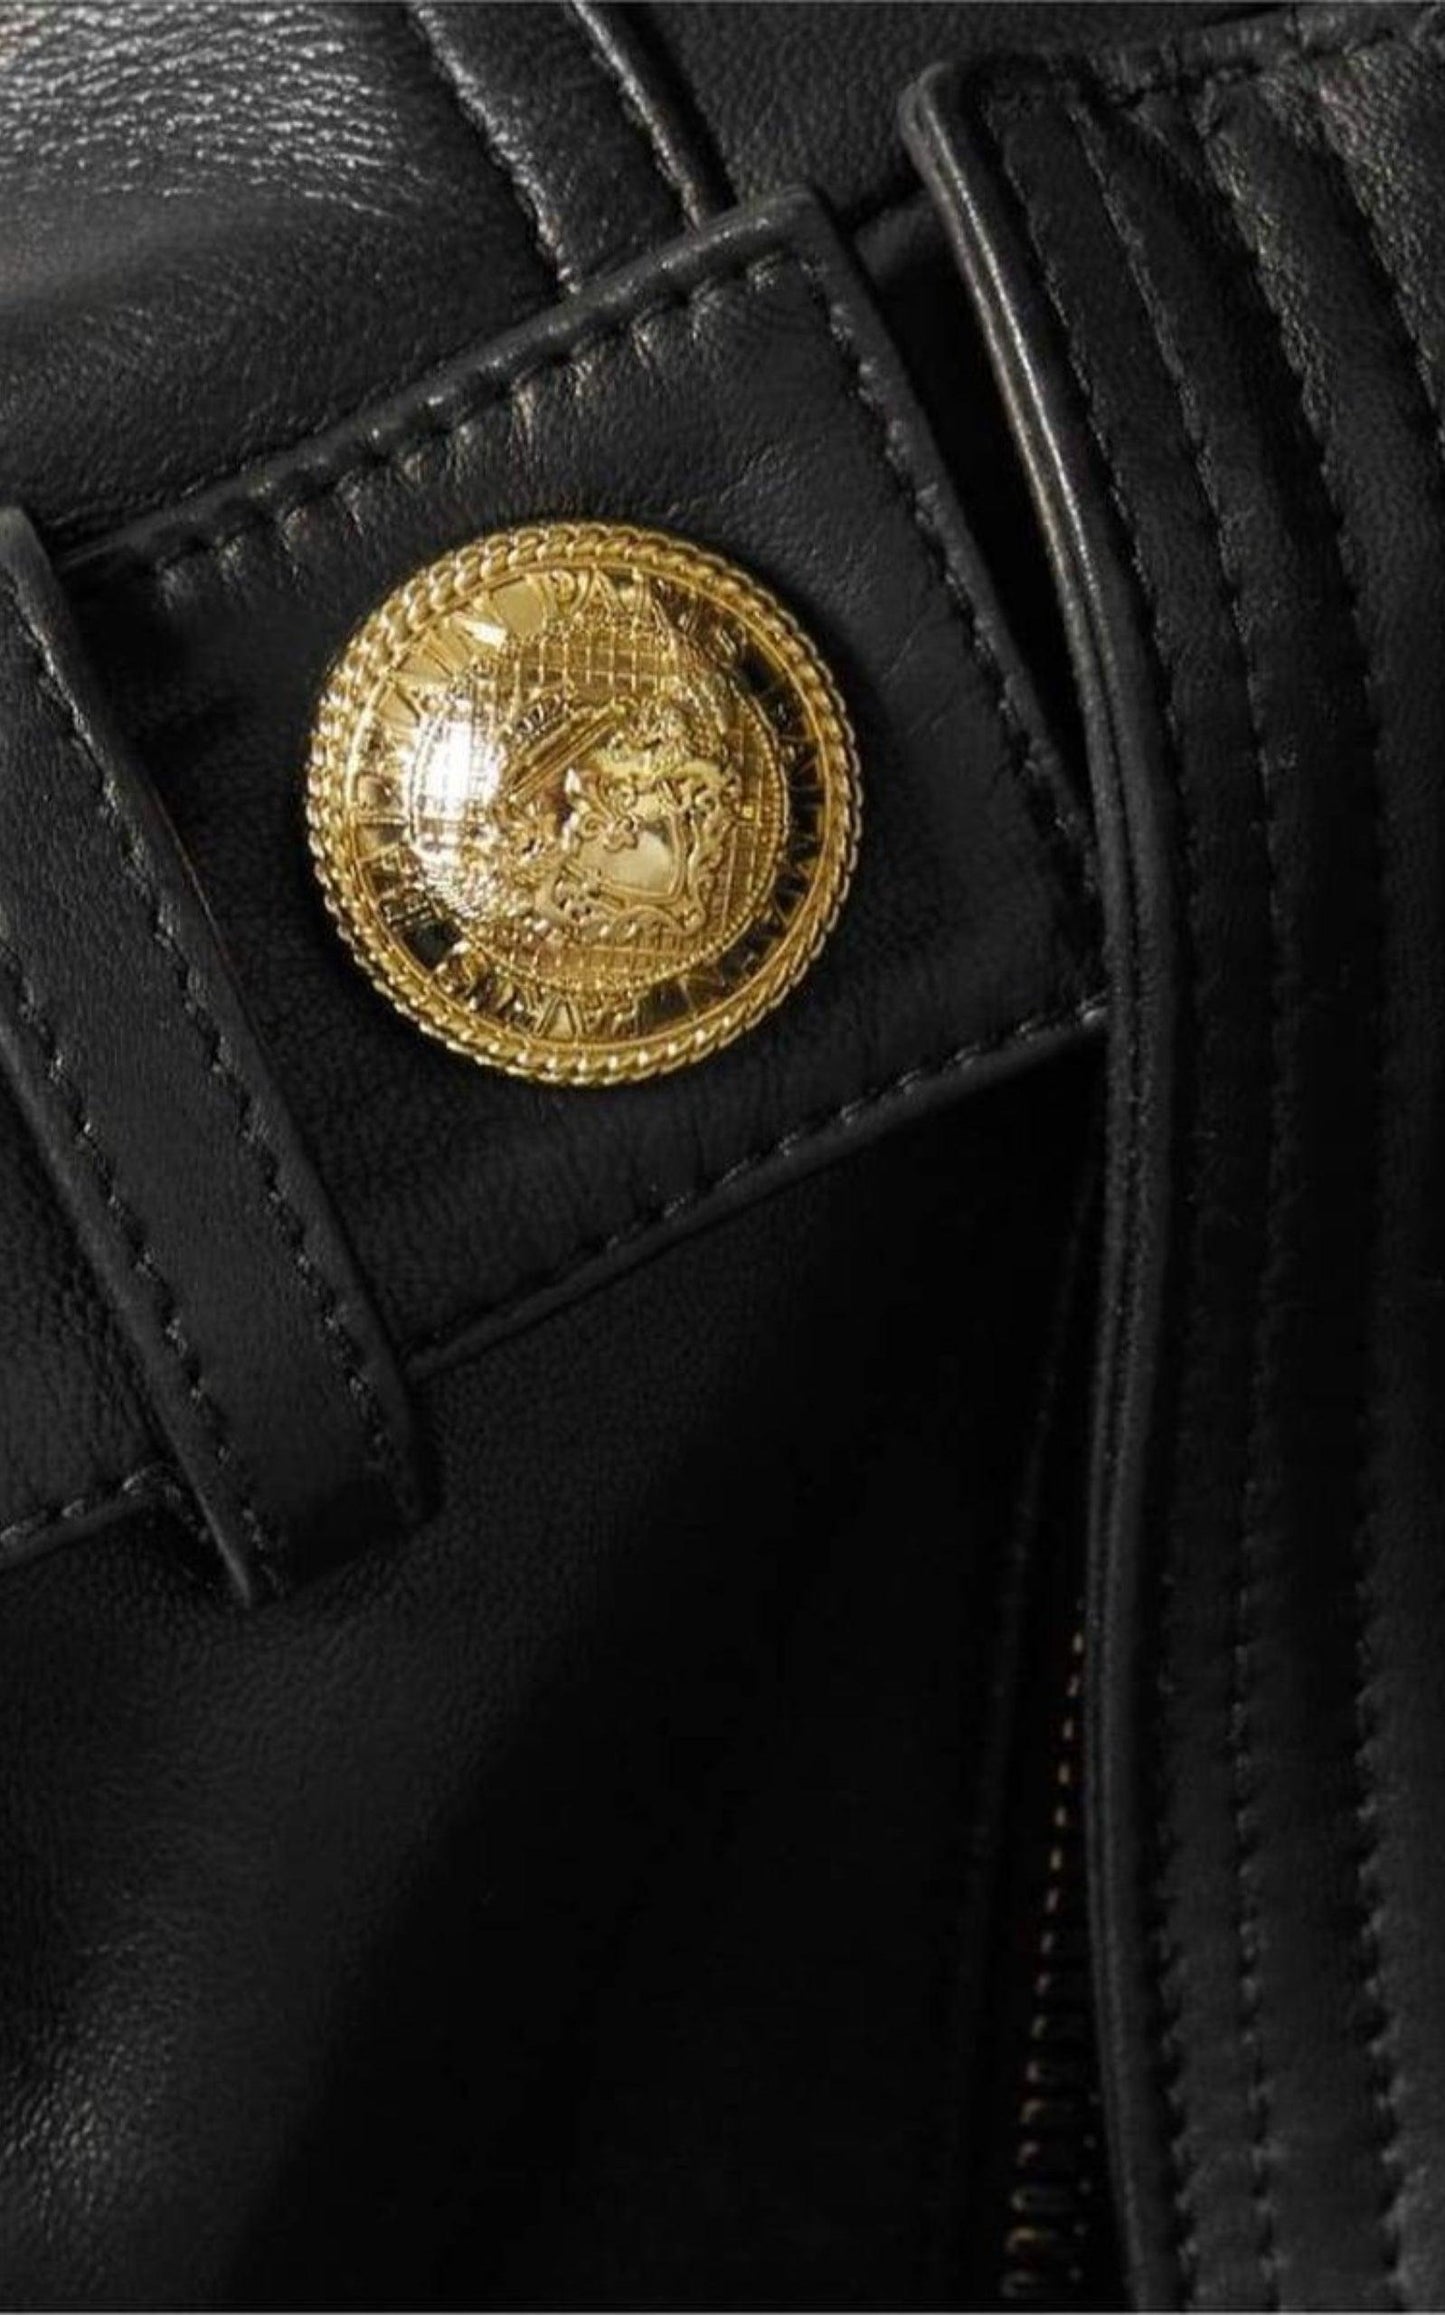  BalmainBlack Buckle Belt Leather Jacket - Runway Catalog